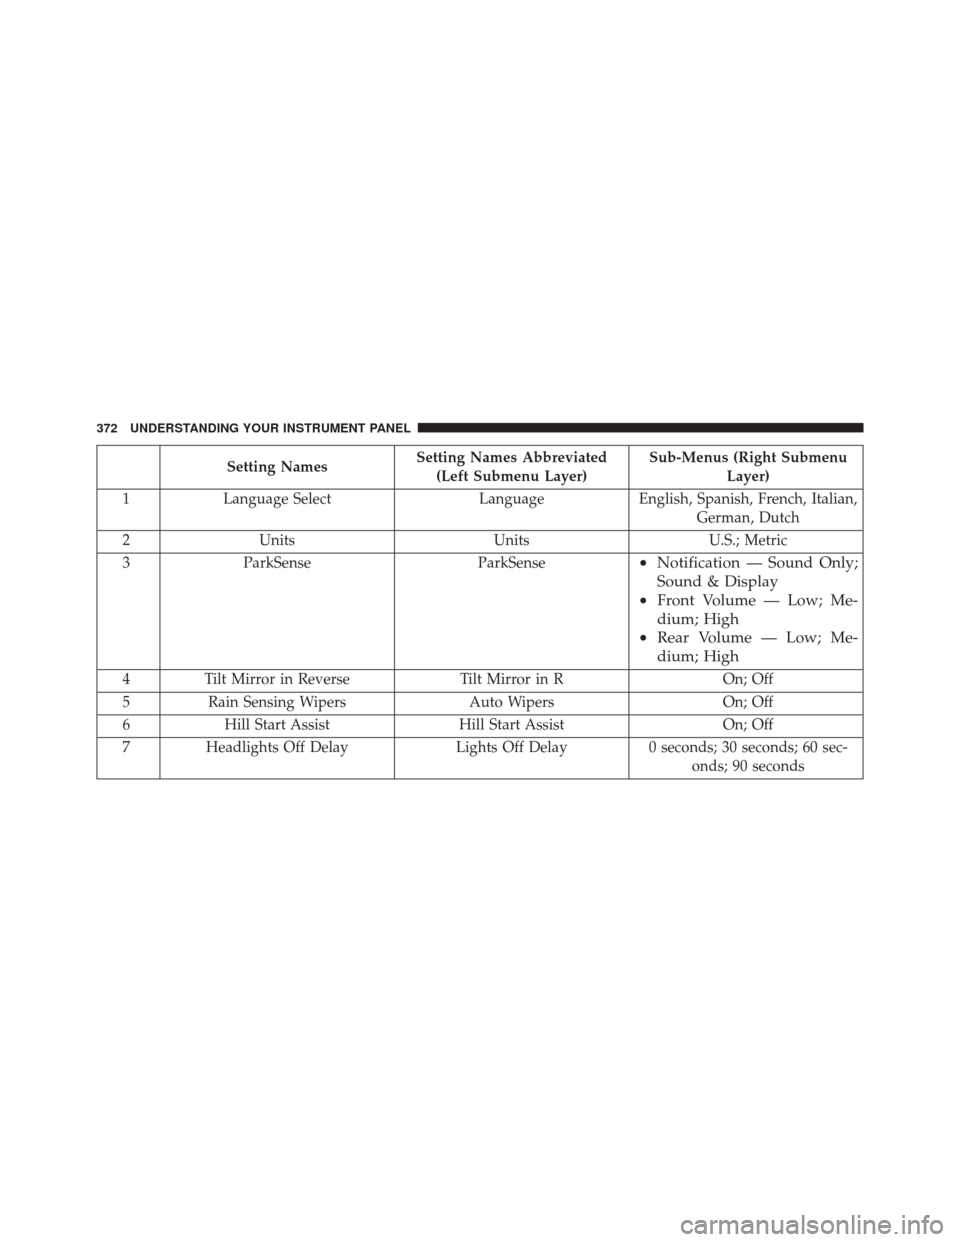 Ram 3500 2016  Owners Manual Setting NamesSetting Names Abbreviated
(Left Submenu Layer) Sub-Menus (Right Submenu
Layer)
1 Language Select LanguageEnglish, Spanish, French, Italian,
German, Dutch
2 Units UnitsU.S.; Metric
3 ParkS